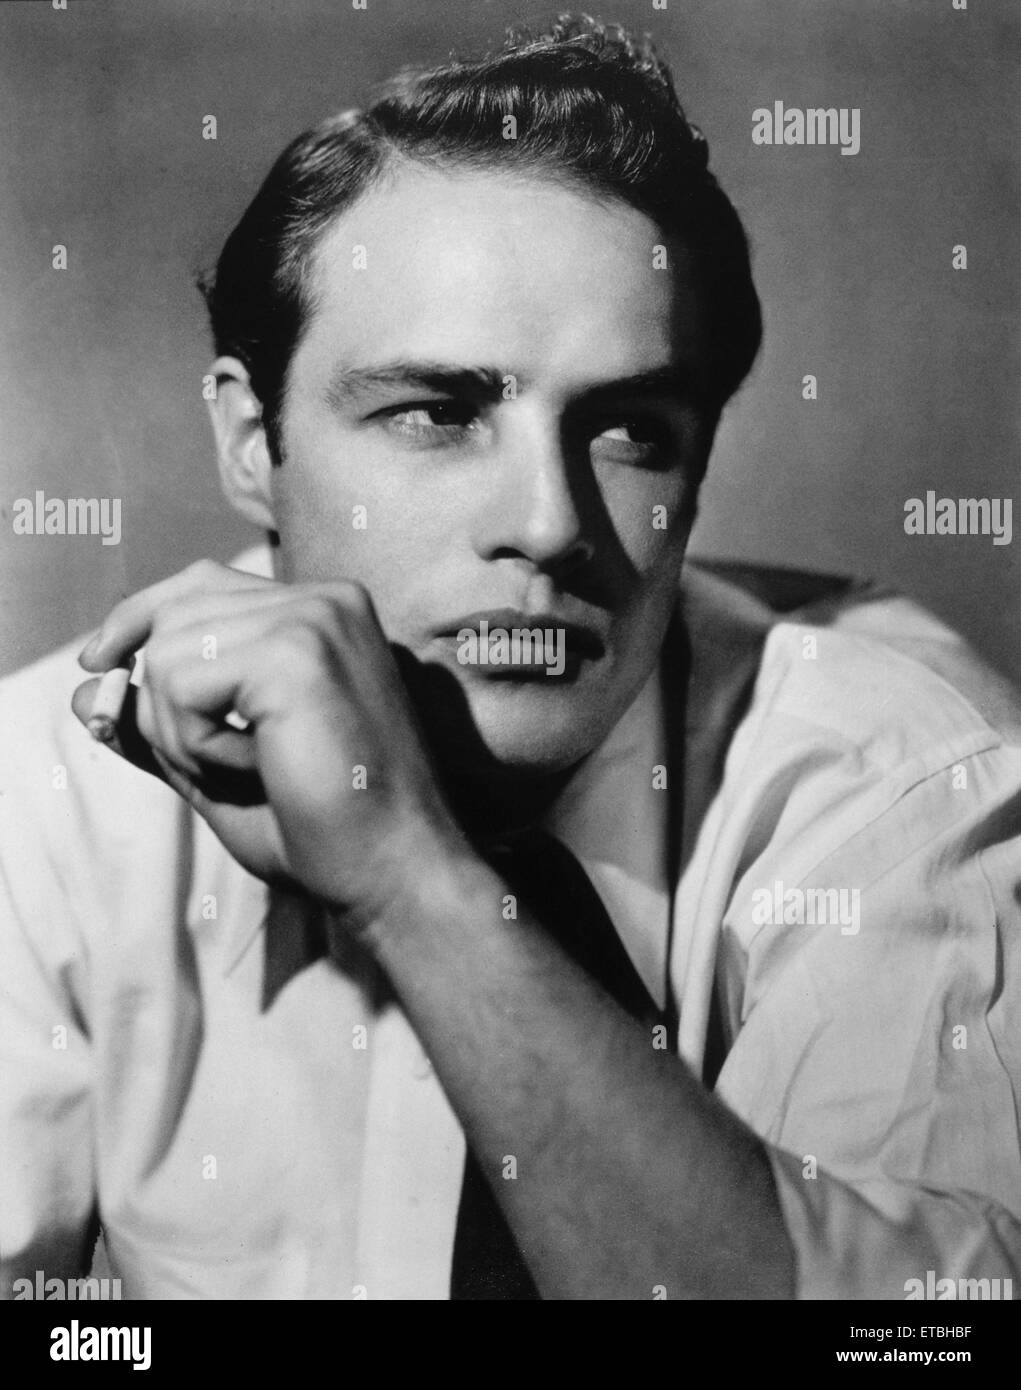 Schauspieler Marlon Brando, Porträt, um 1950 Stockfoto